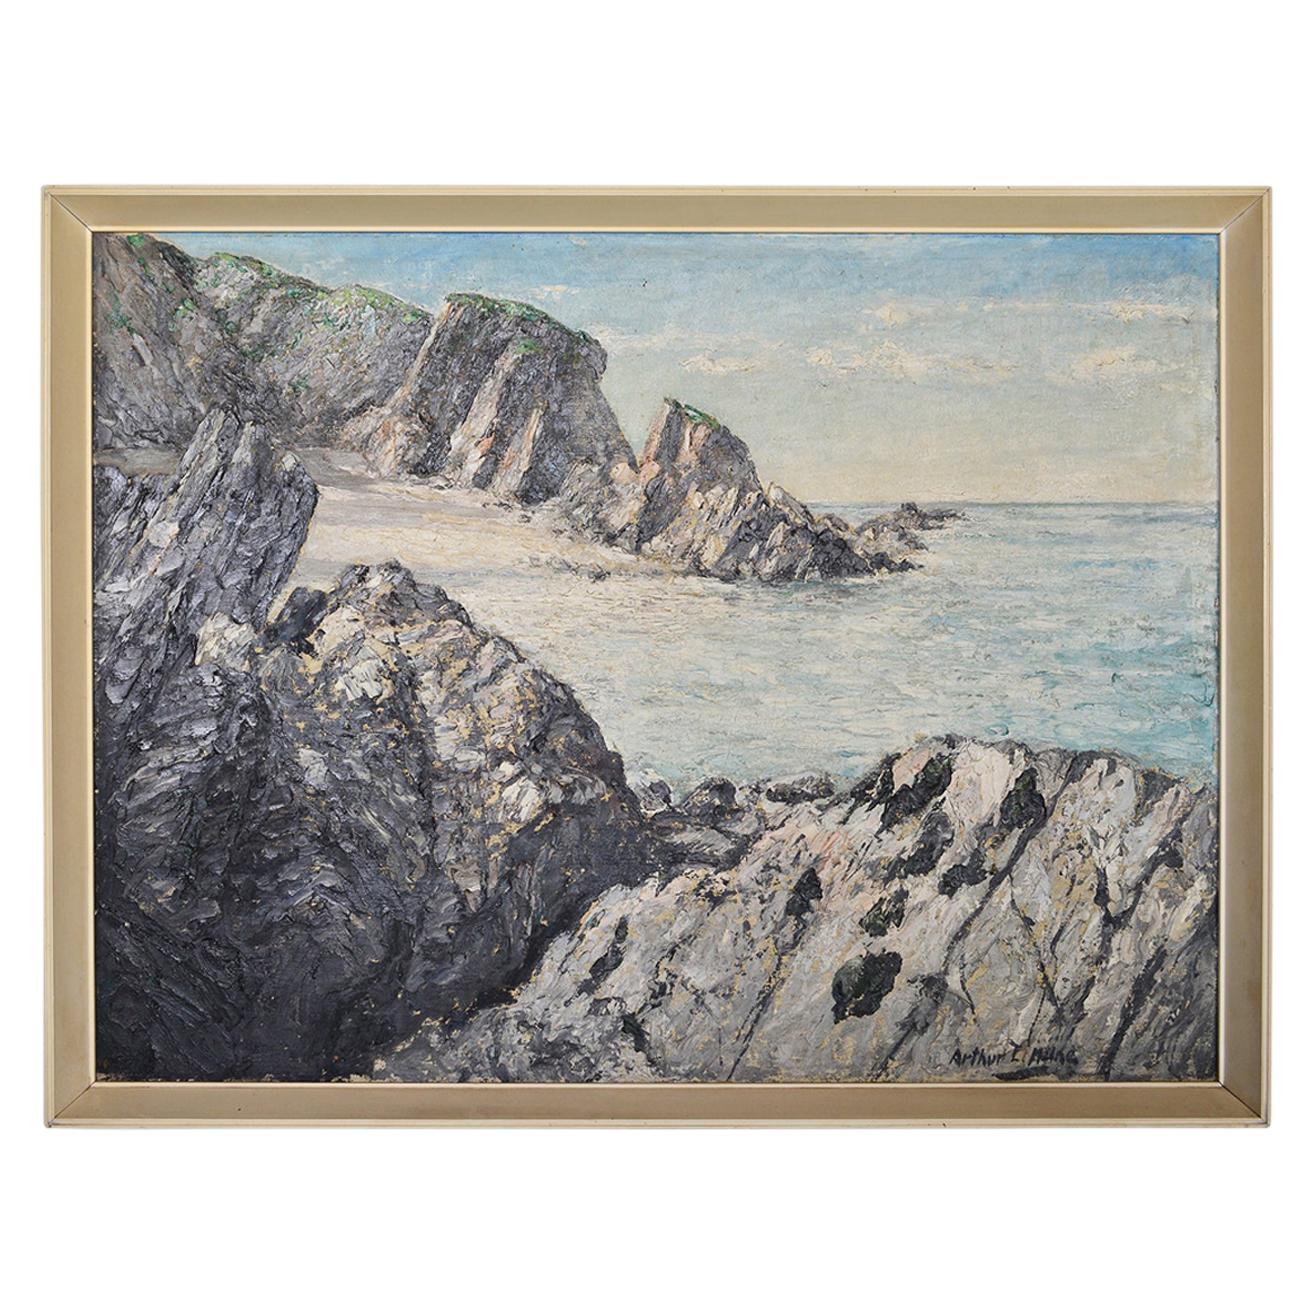 1950s British Coastal Scene Seascape Oil on Board Painting by Arthur E. Milne